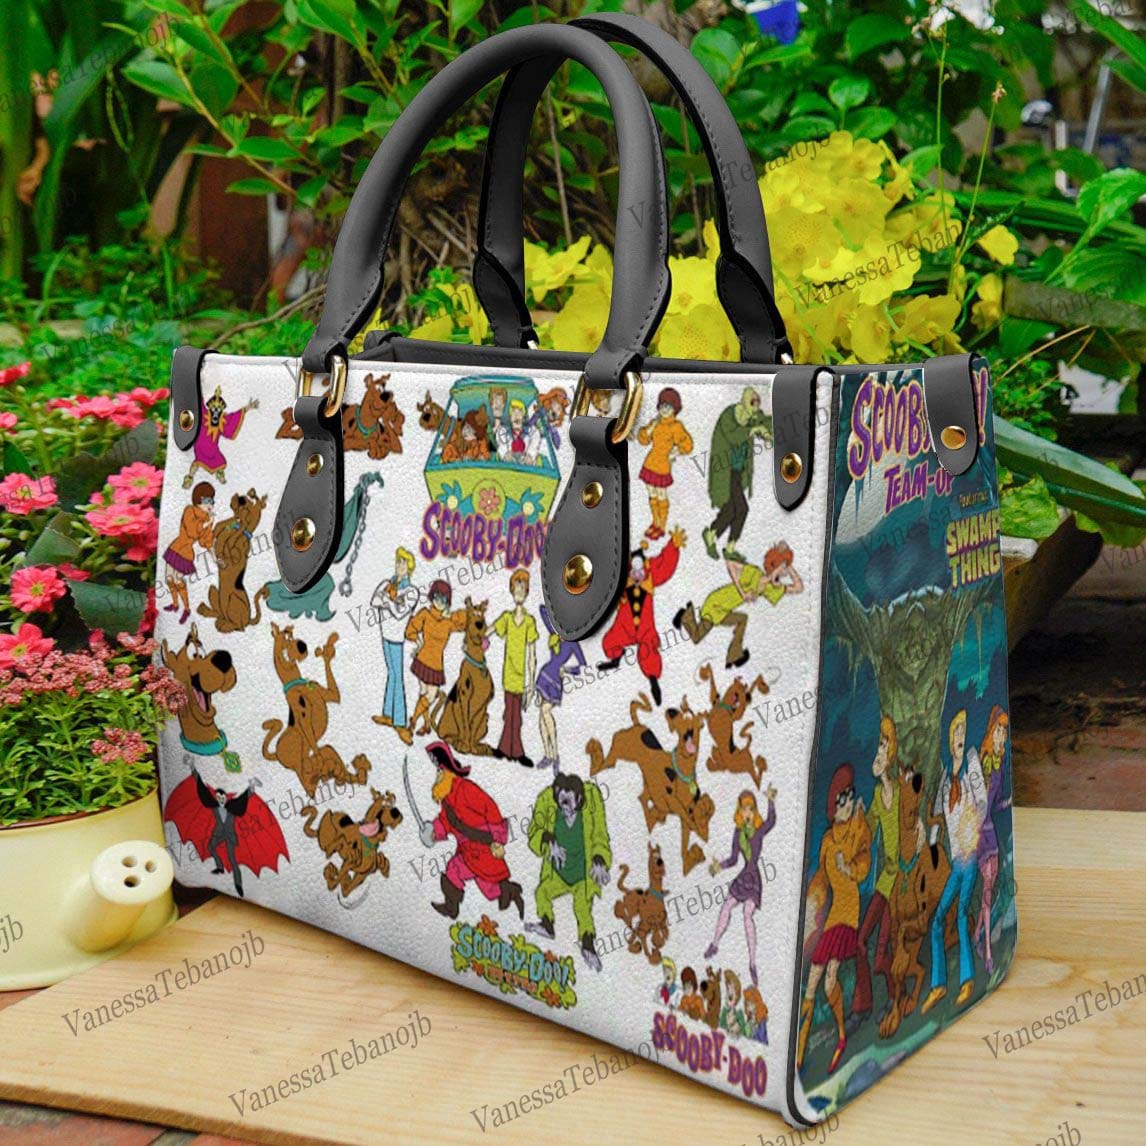 Scooby Doo Leather Handbag, Leather Bag